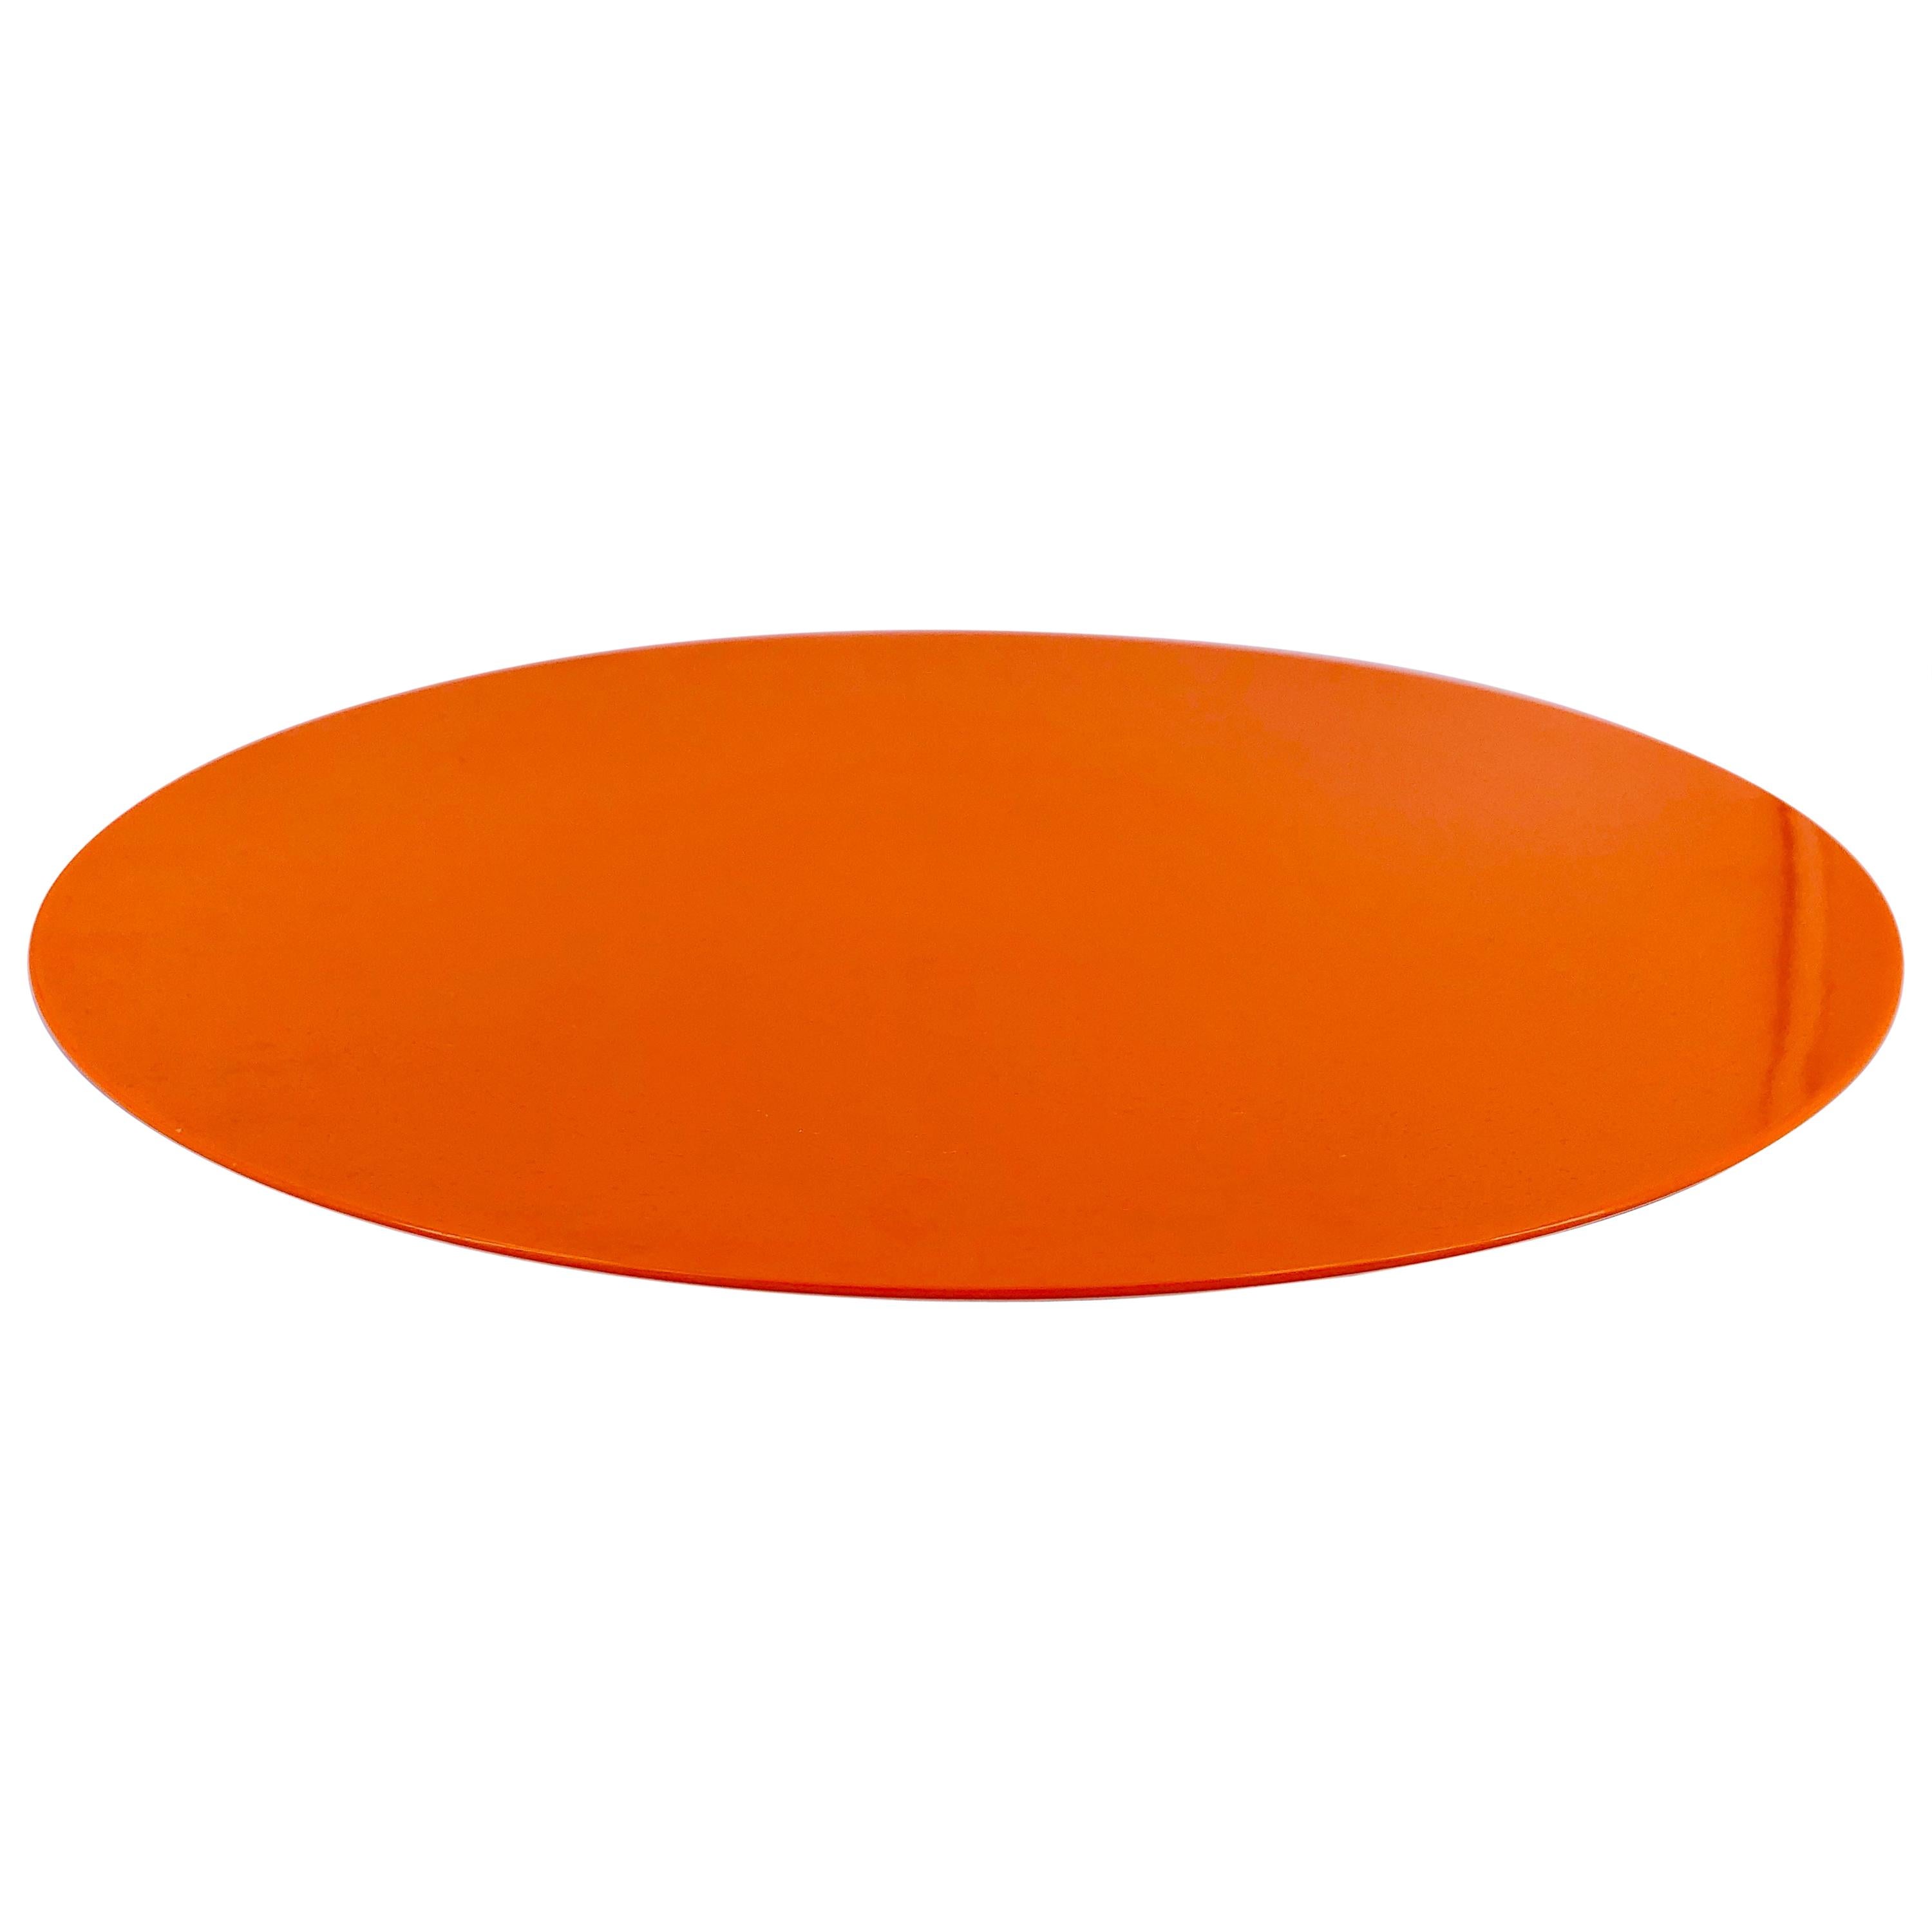 1970s Space Age Orange Melamine Large Centerpiece Plate